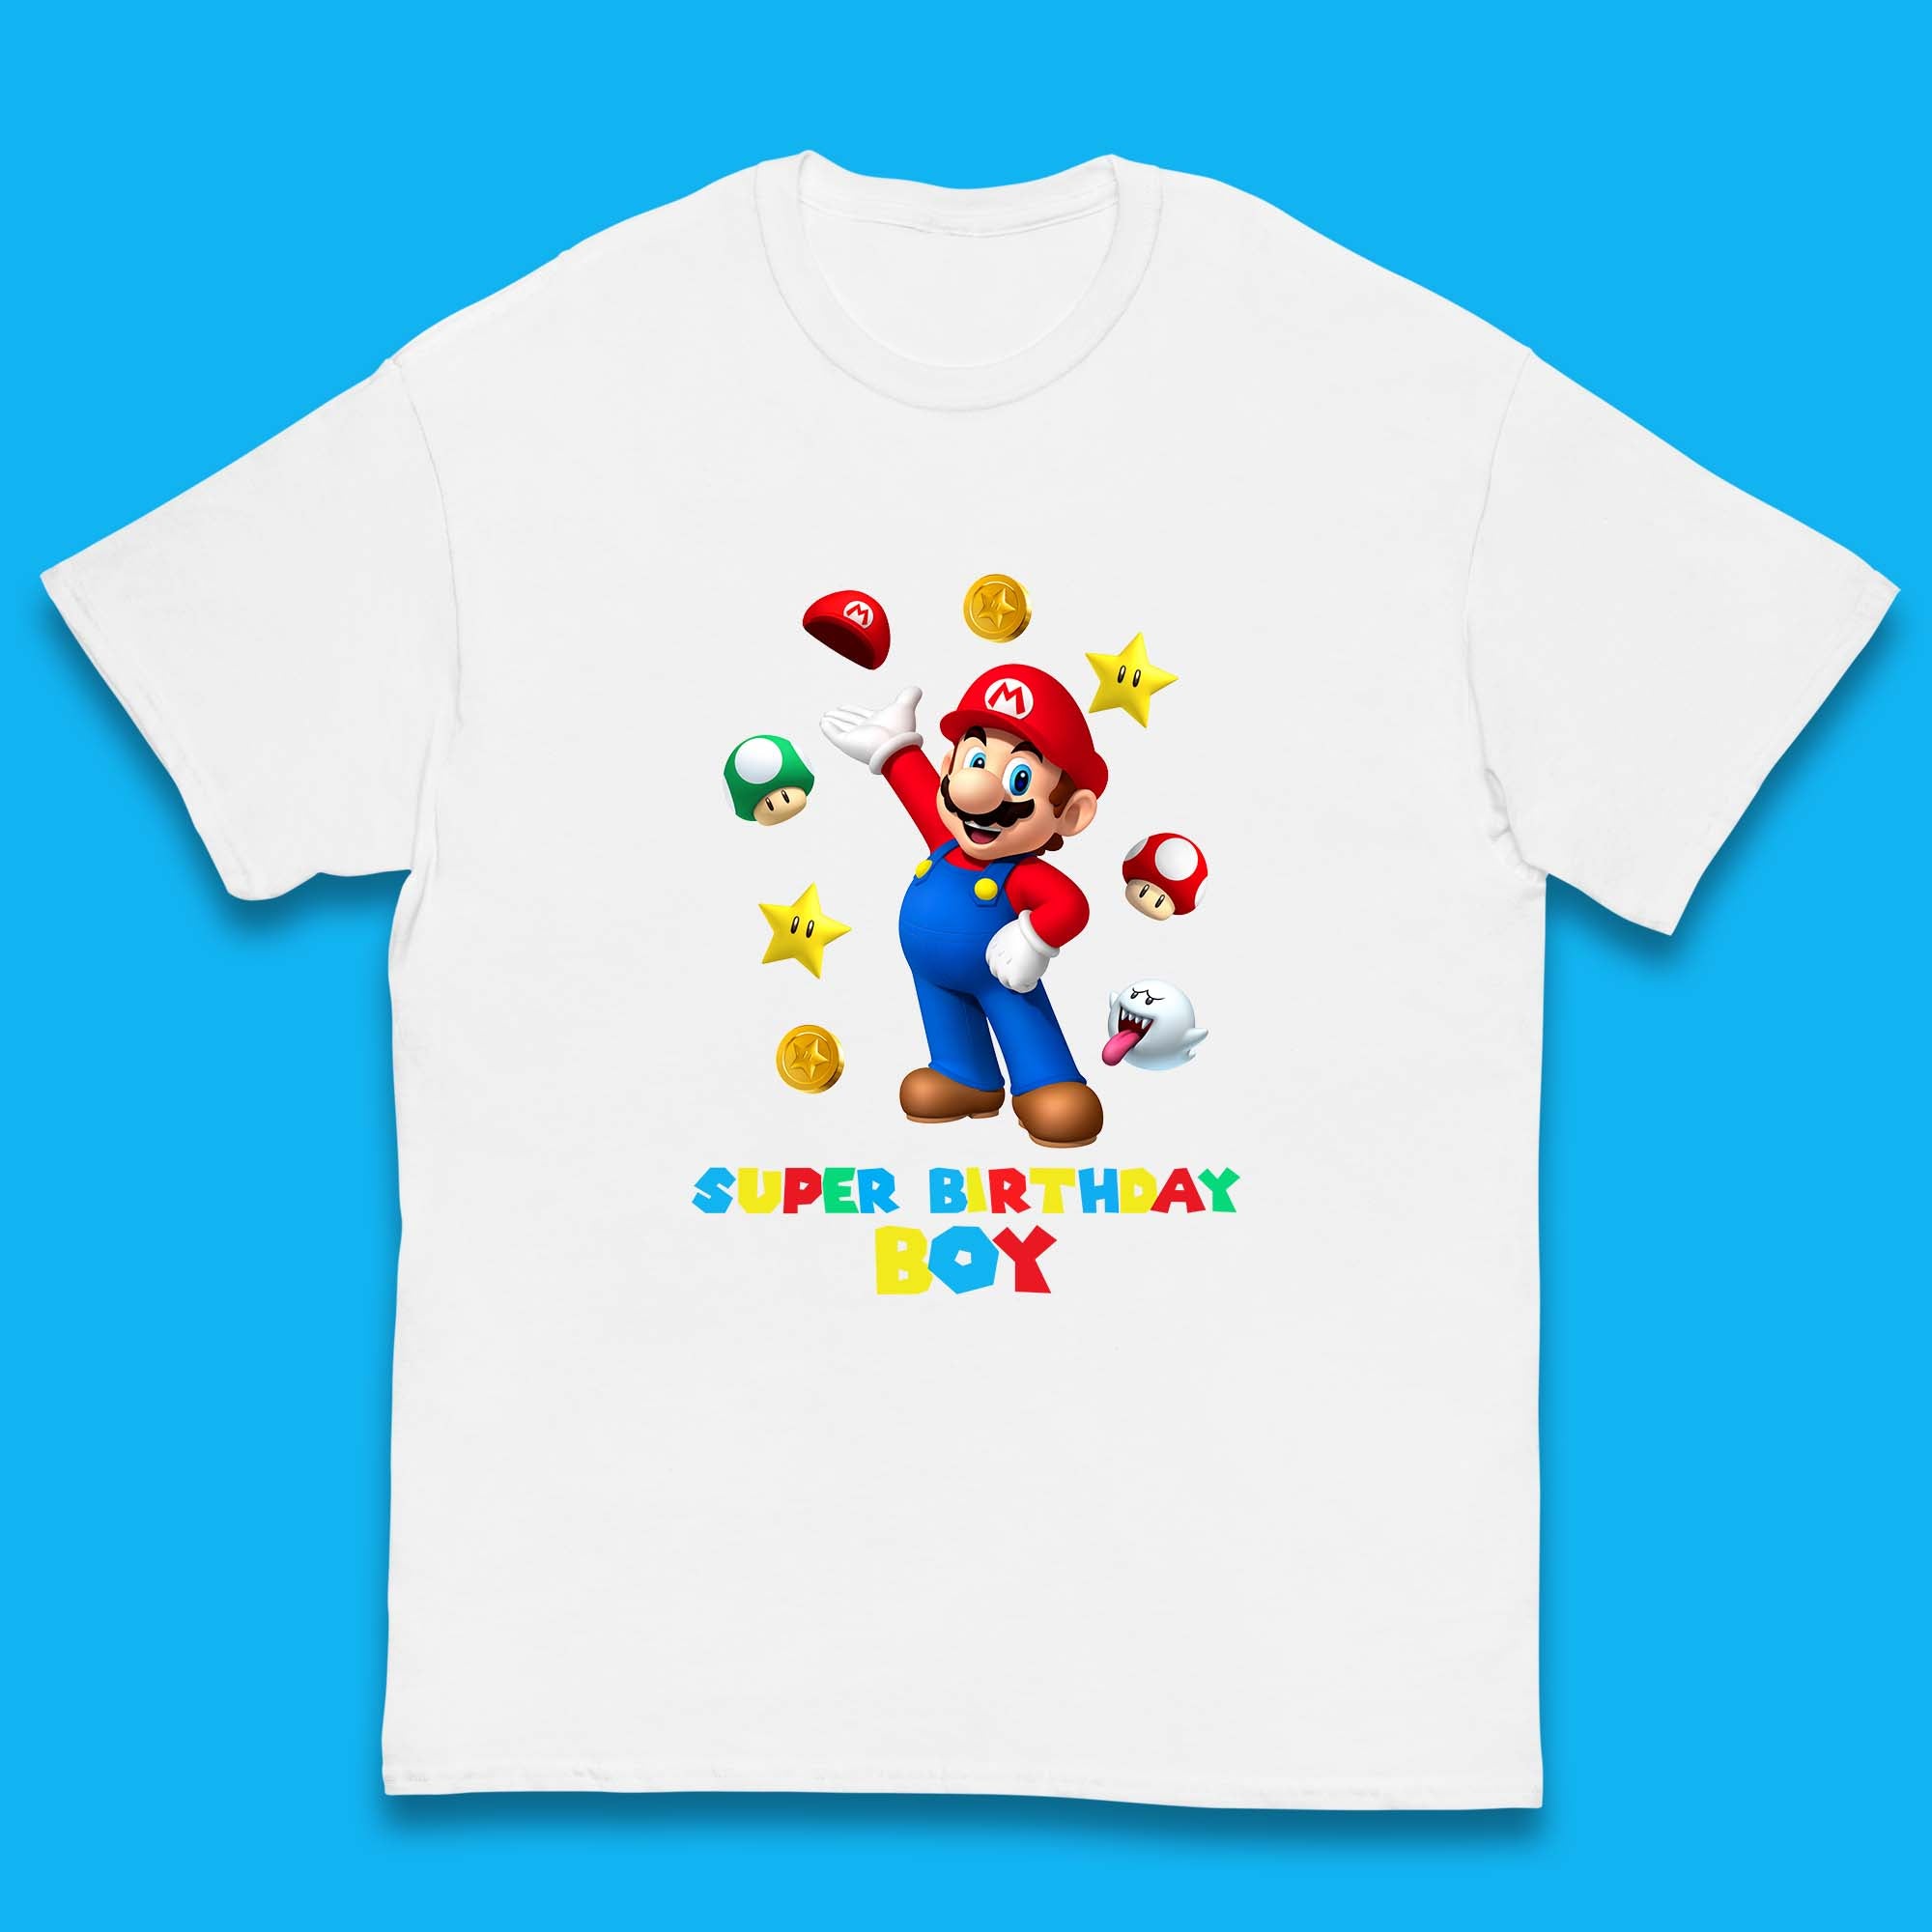 Super Birthday Boy Super Mario Game Series Mario Bros Super Mario Theme Birthday Party Kids T Shirt